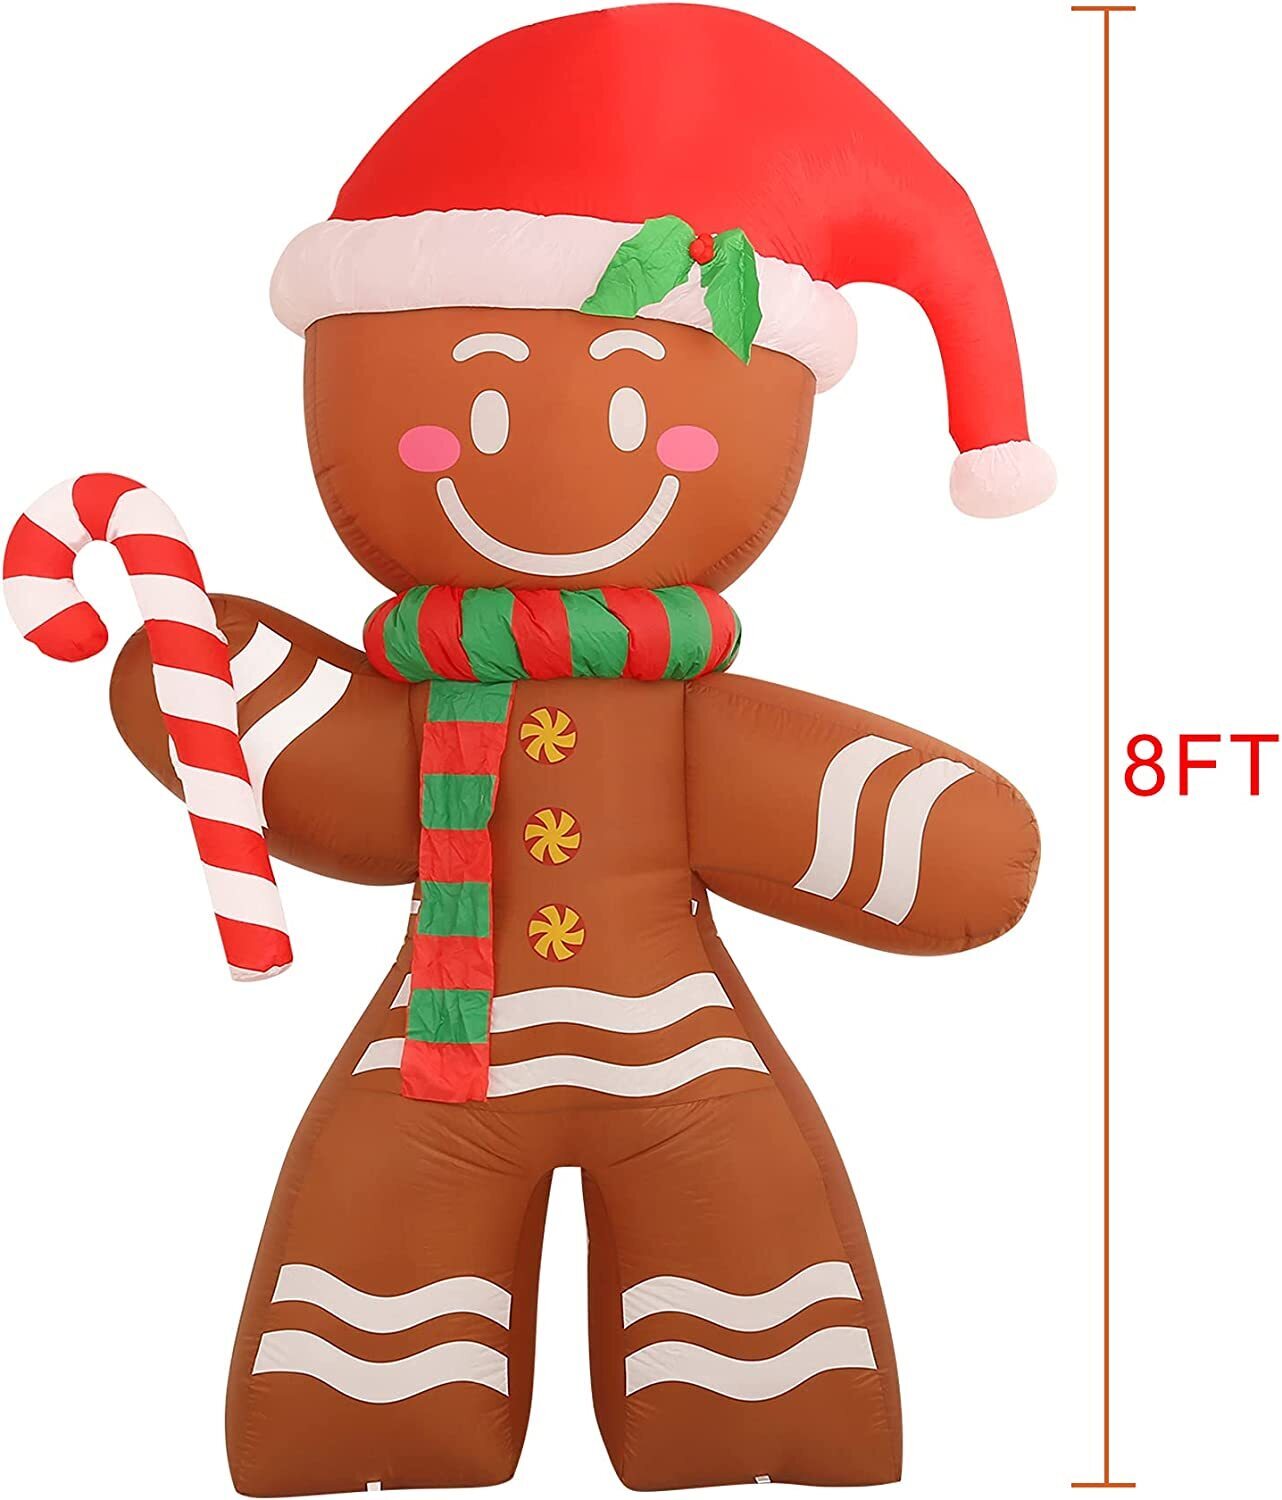 Gingerbread Man super september 8 FT Gingerbread Man Built-in LED Blow Up Christmas Inflatables Decoration Gingerbread Man,Christmas Inflatable